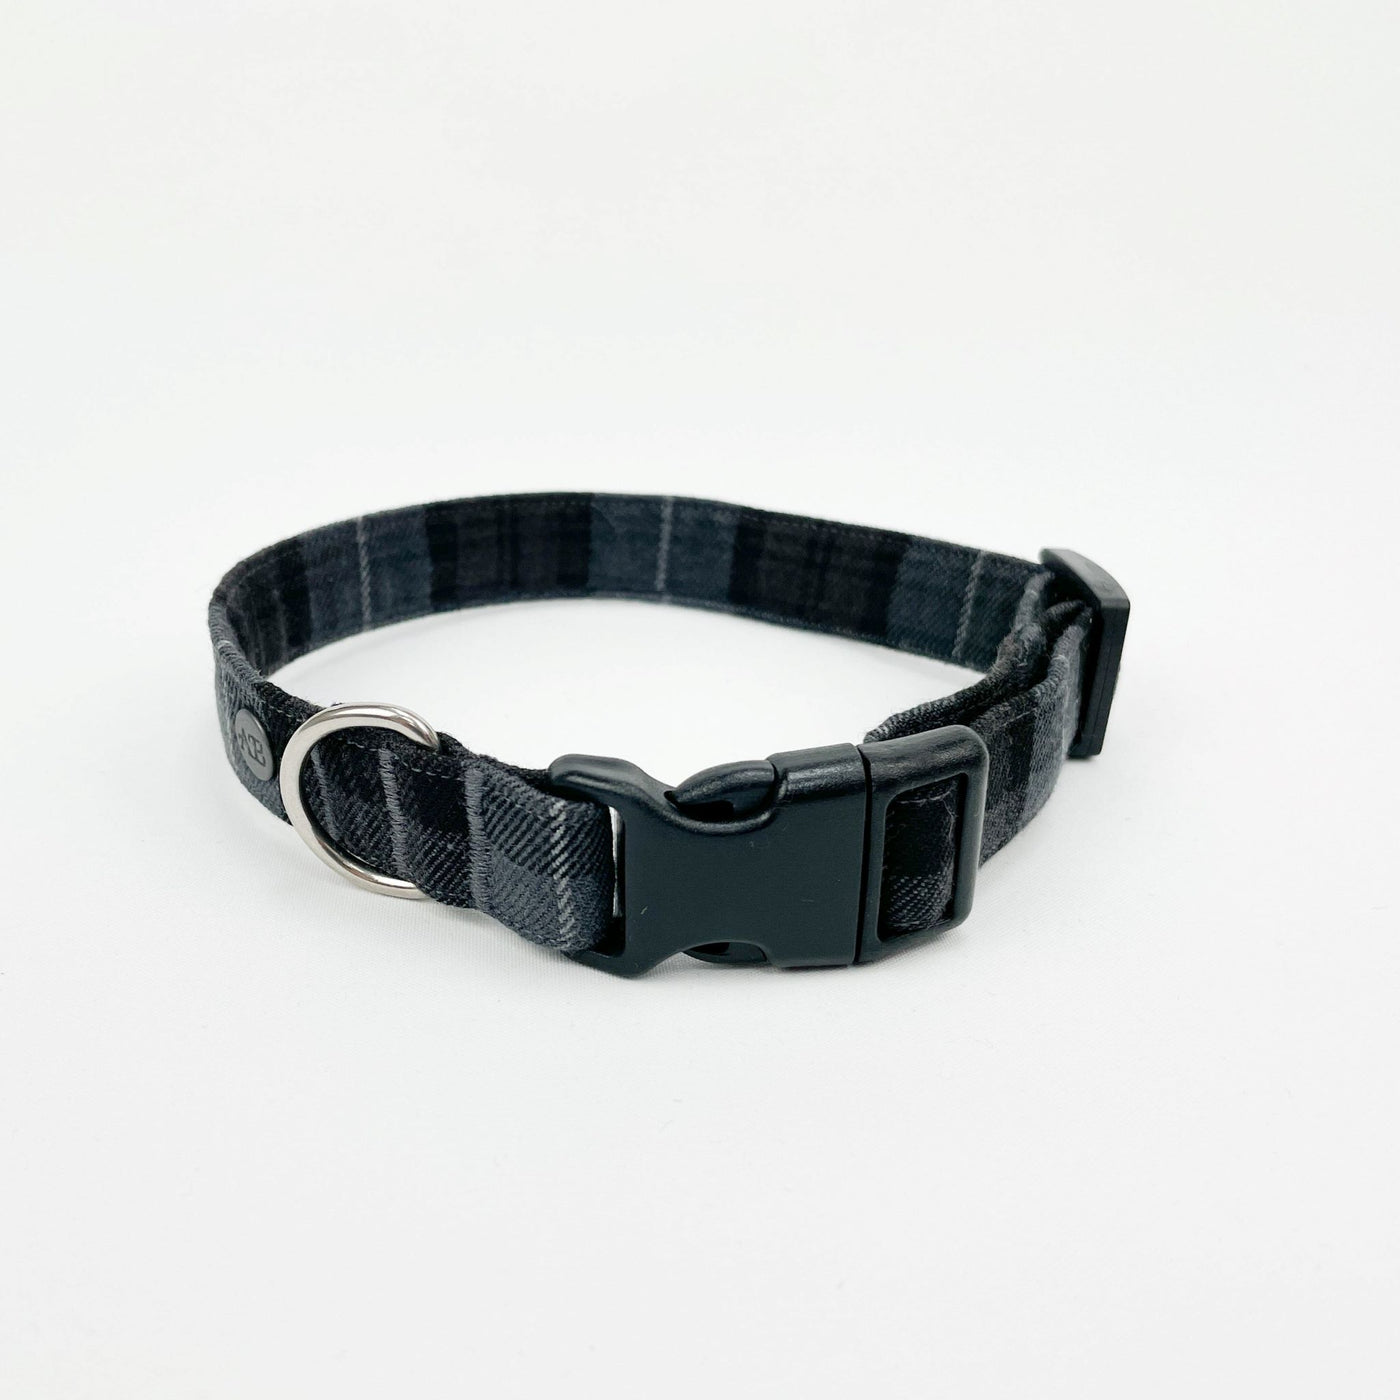 Charcoal grey tartan print dog collar.